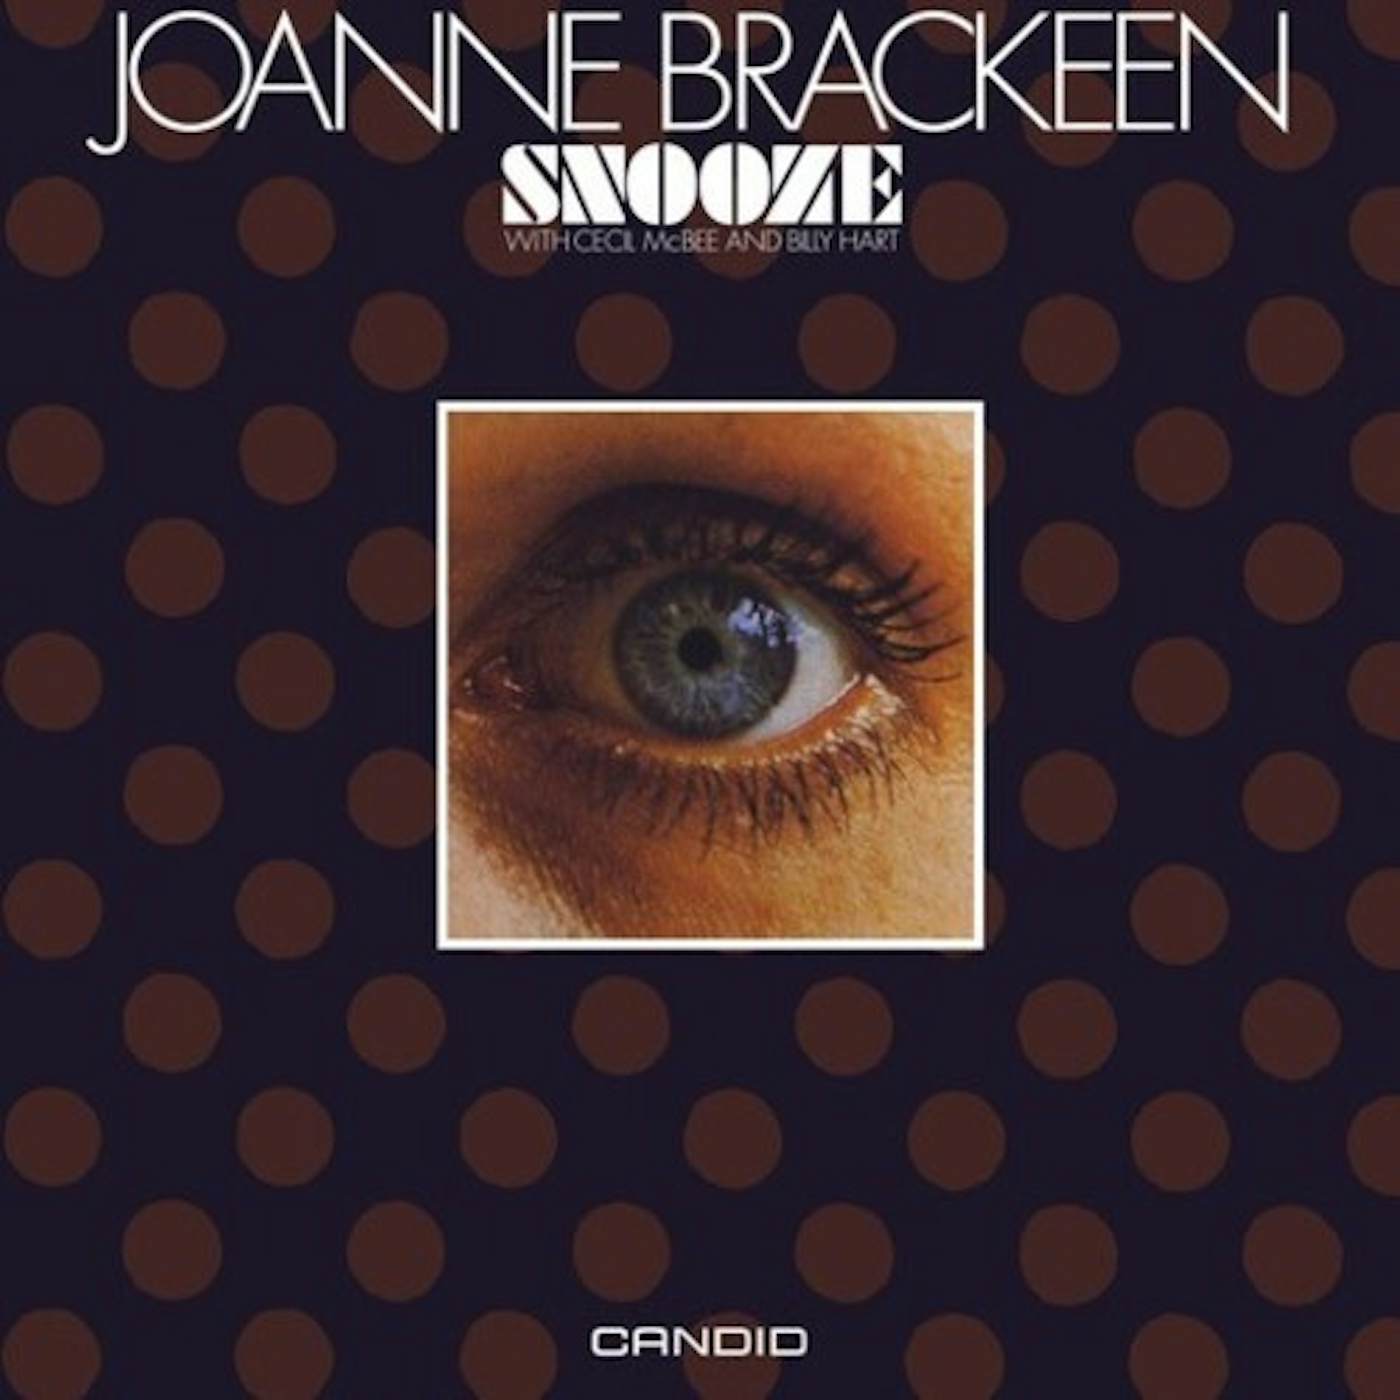 Joanne Brackeen SNOOZE Vinyl Record